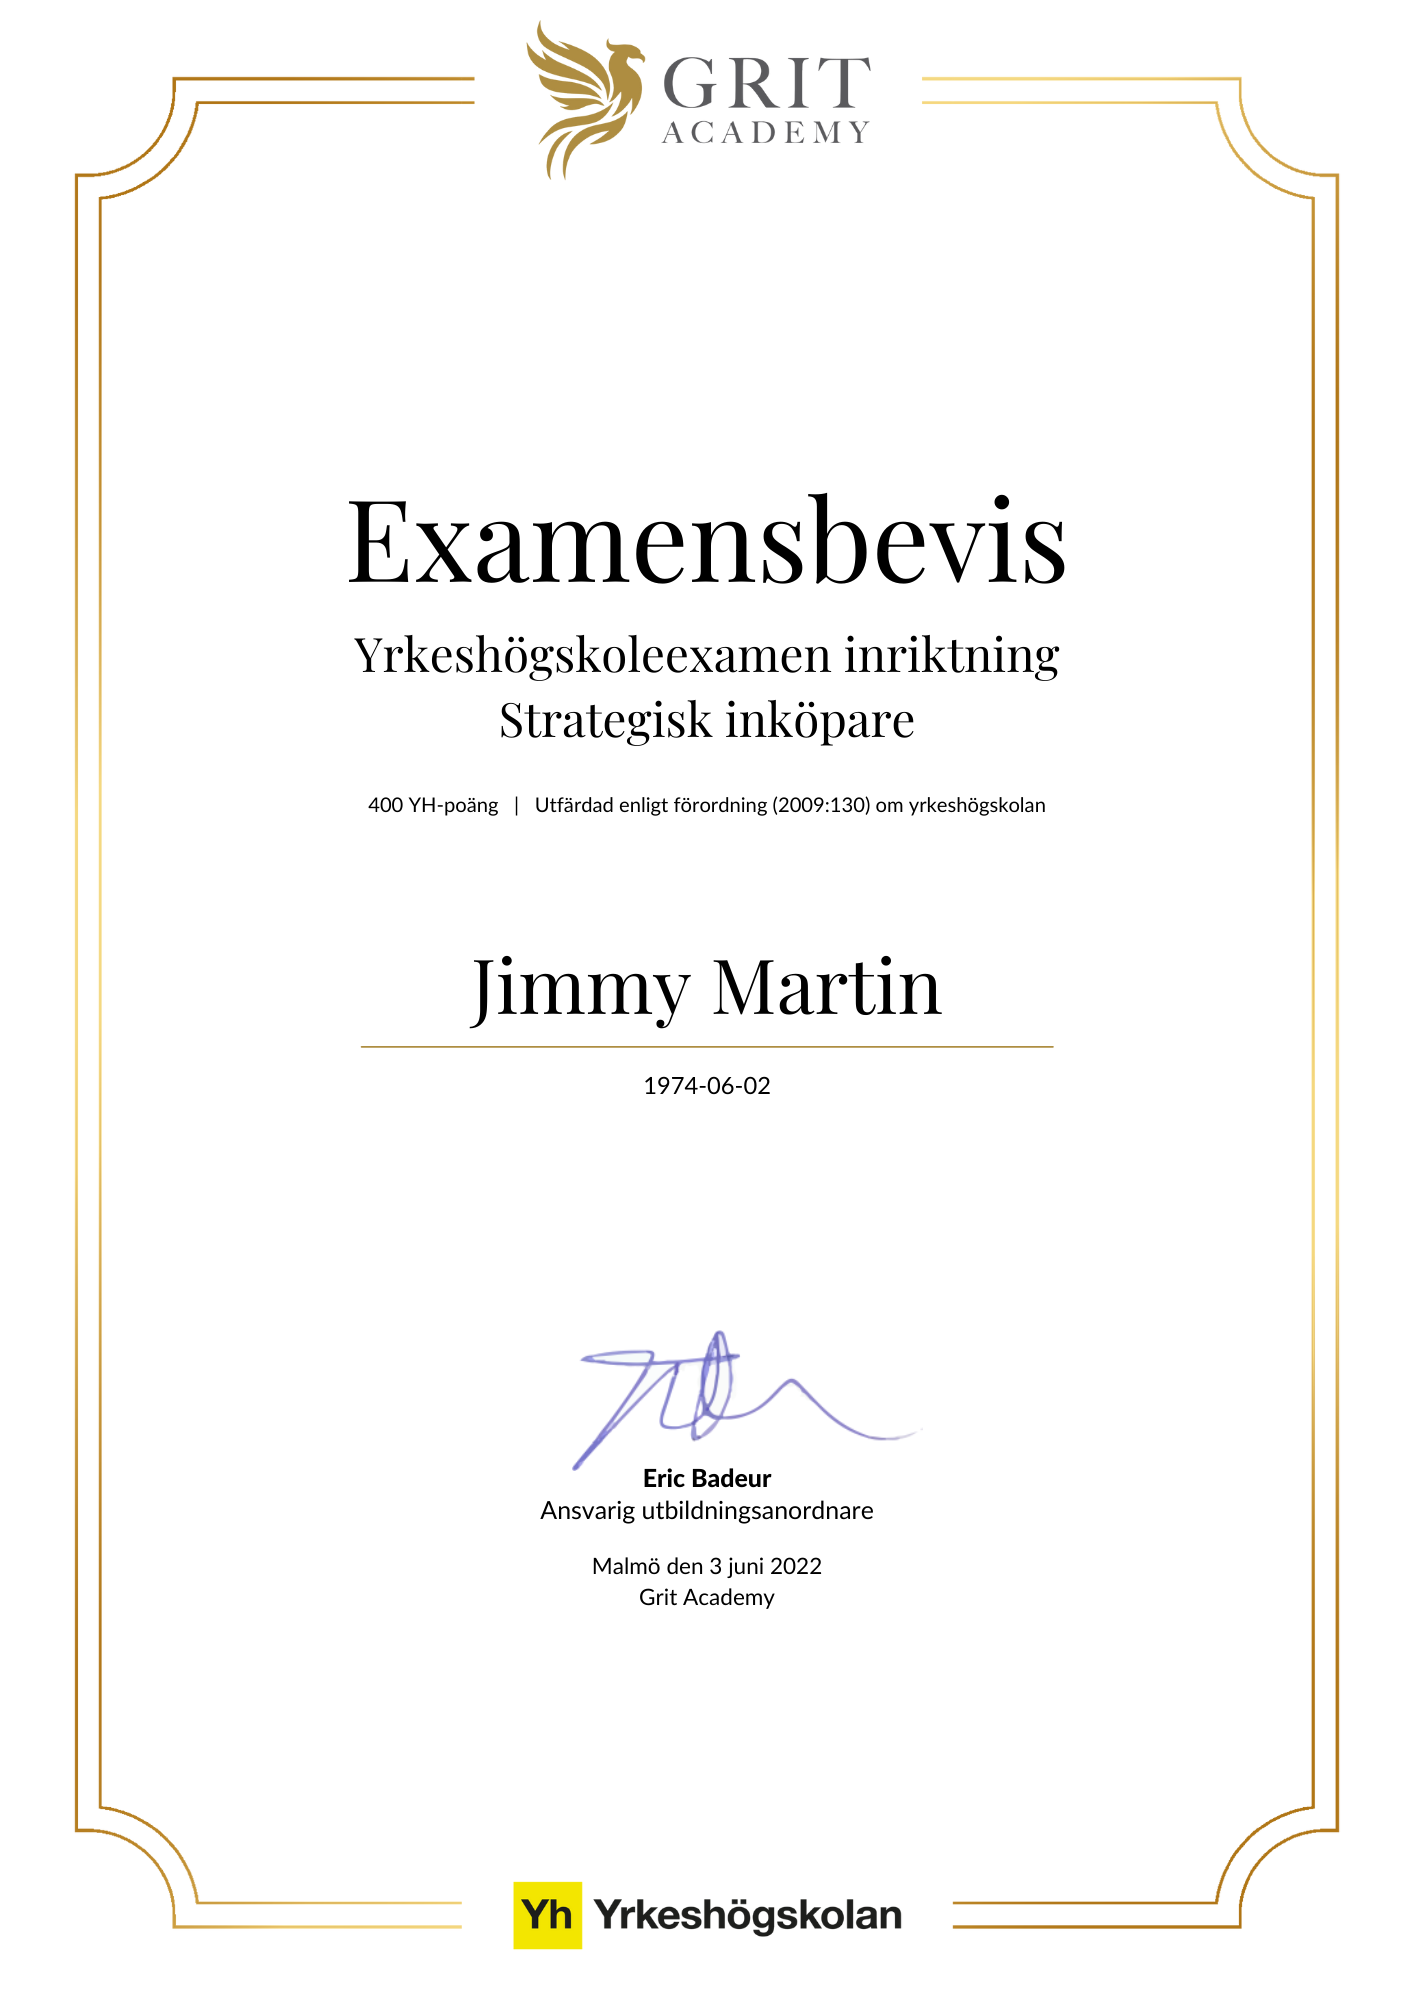 Examensbevis Jimmy Martin - 1